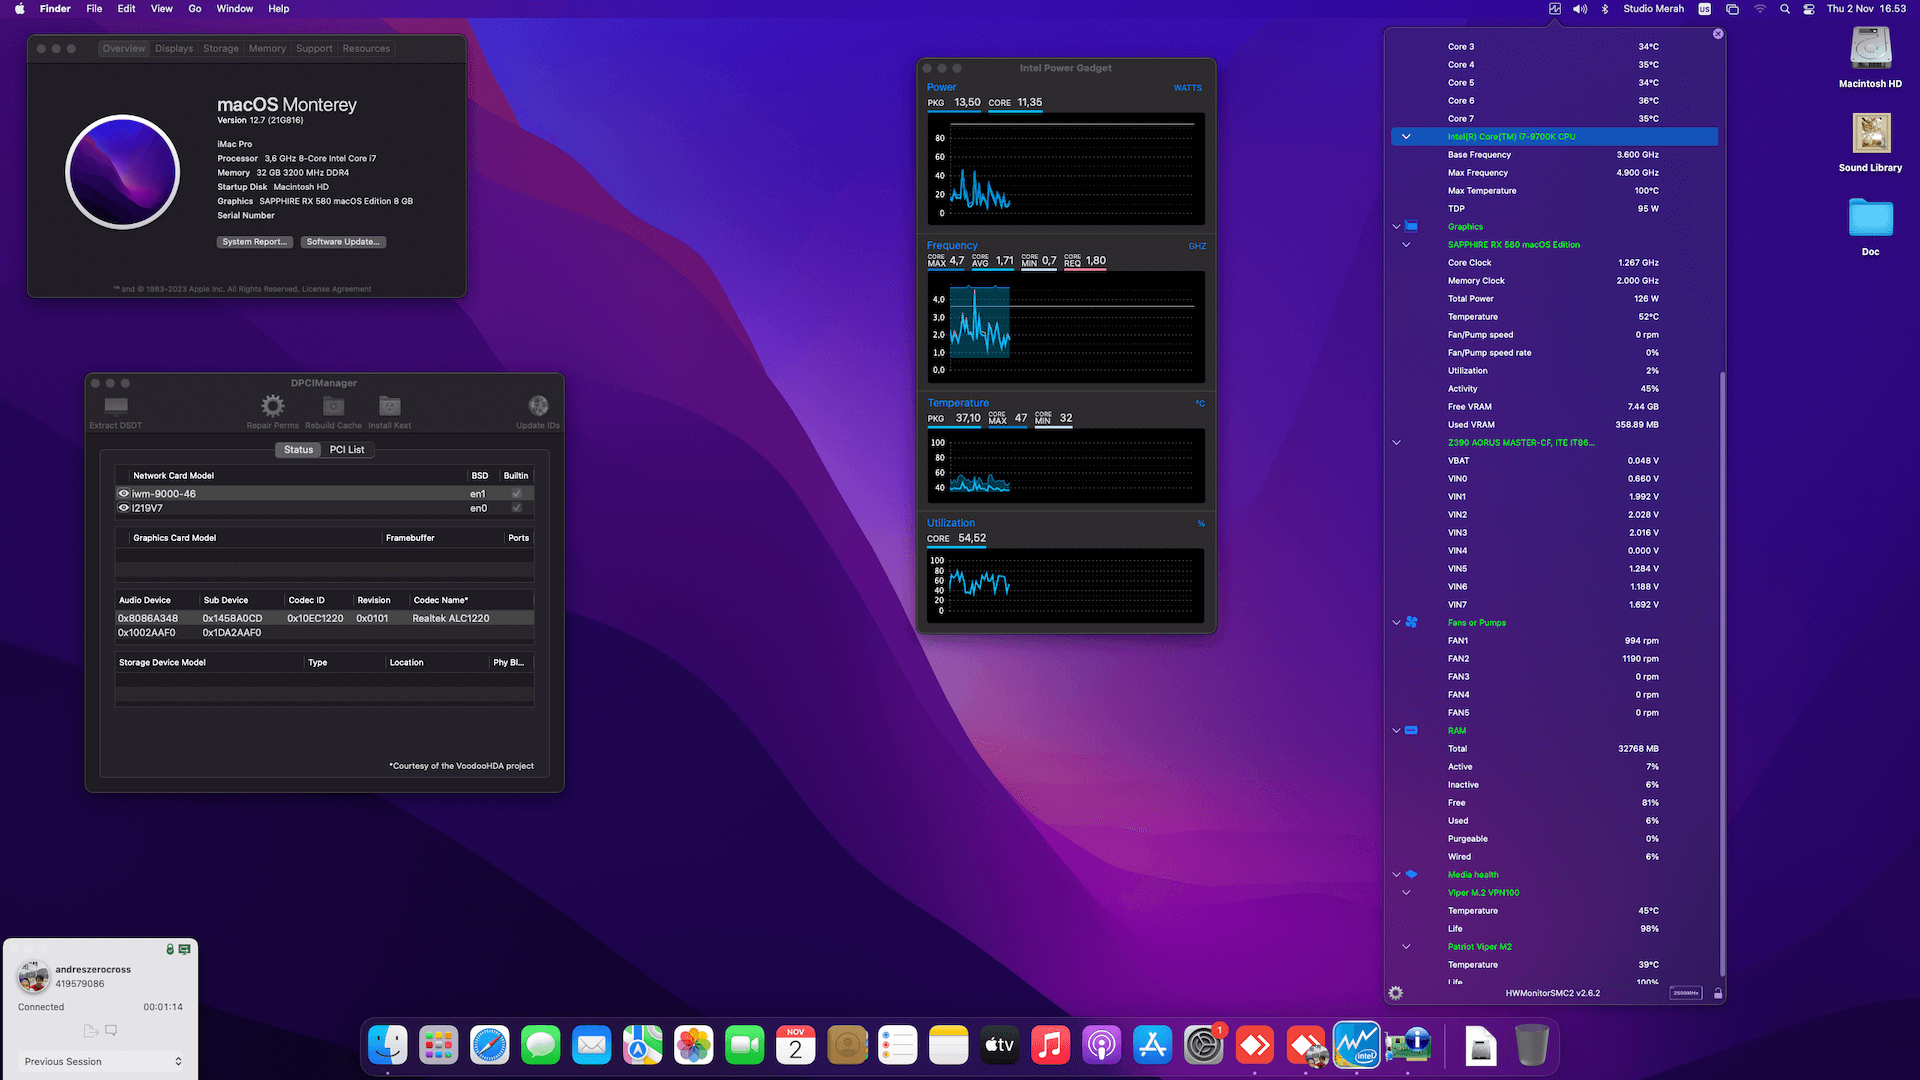 Success Hackintosh macOS Monterey 12.7 Build 21G816 in Gigabyte Z390 Aorus Master + Intel Core i7 9700K + Sapphire RX 580